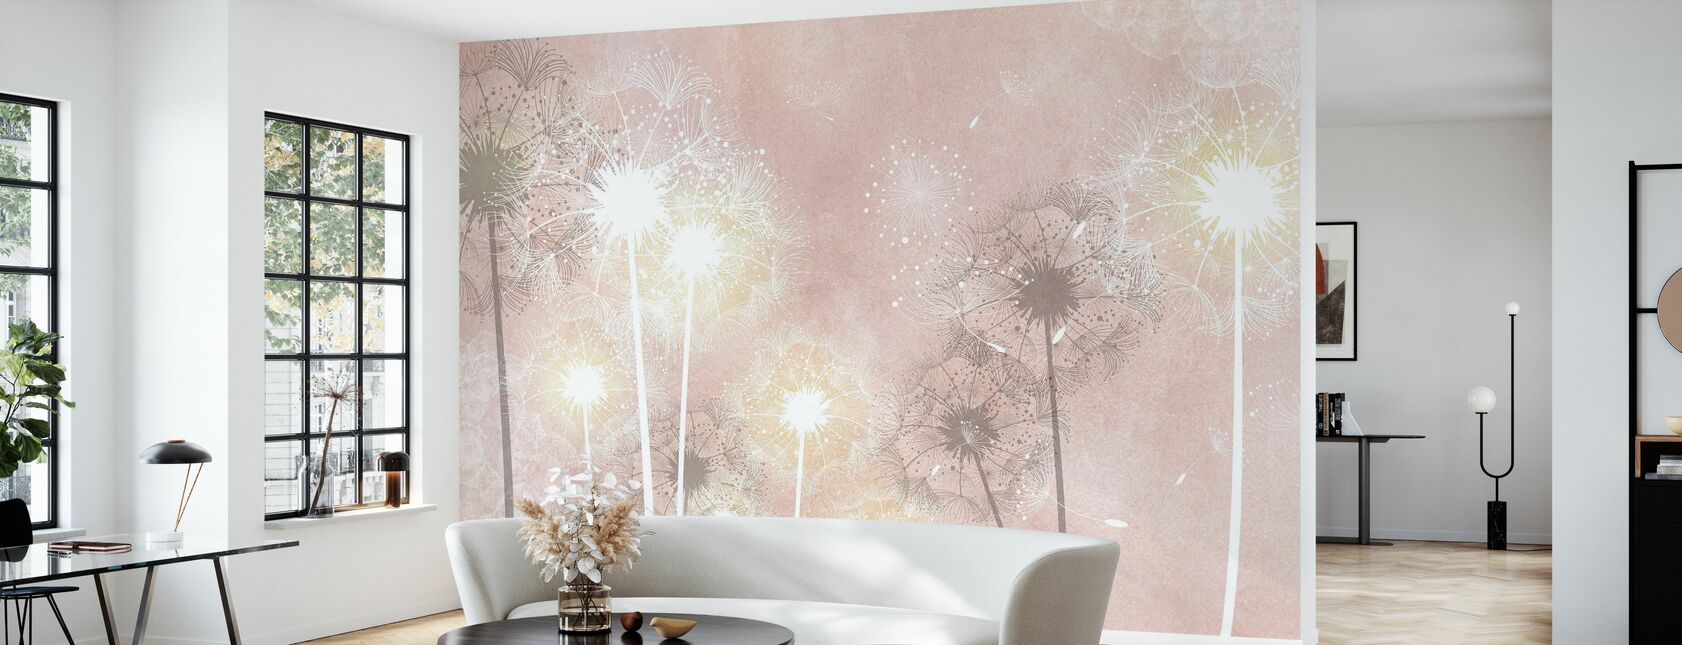 Dandelion Sky VIII - Wallpaper - Living Room